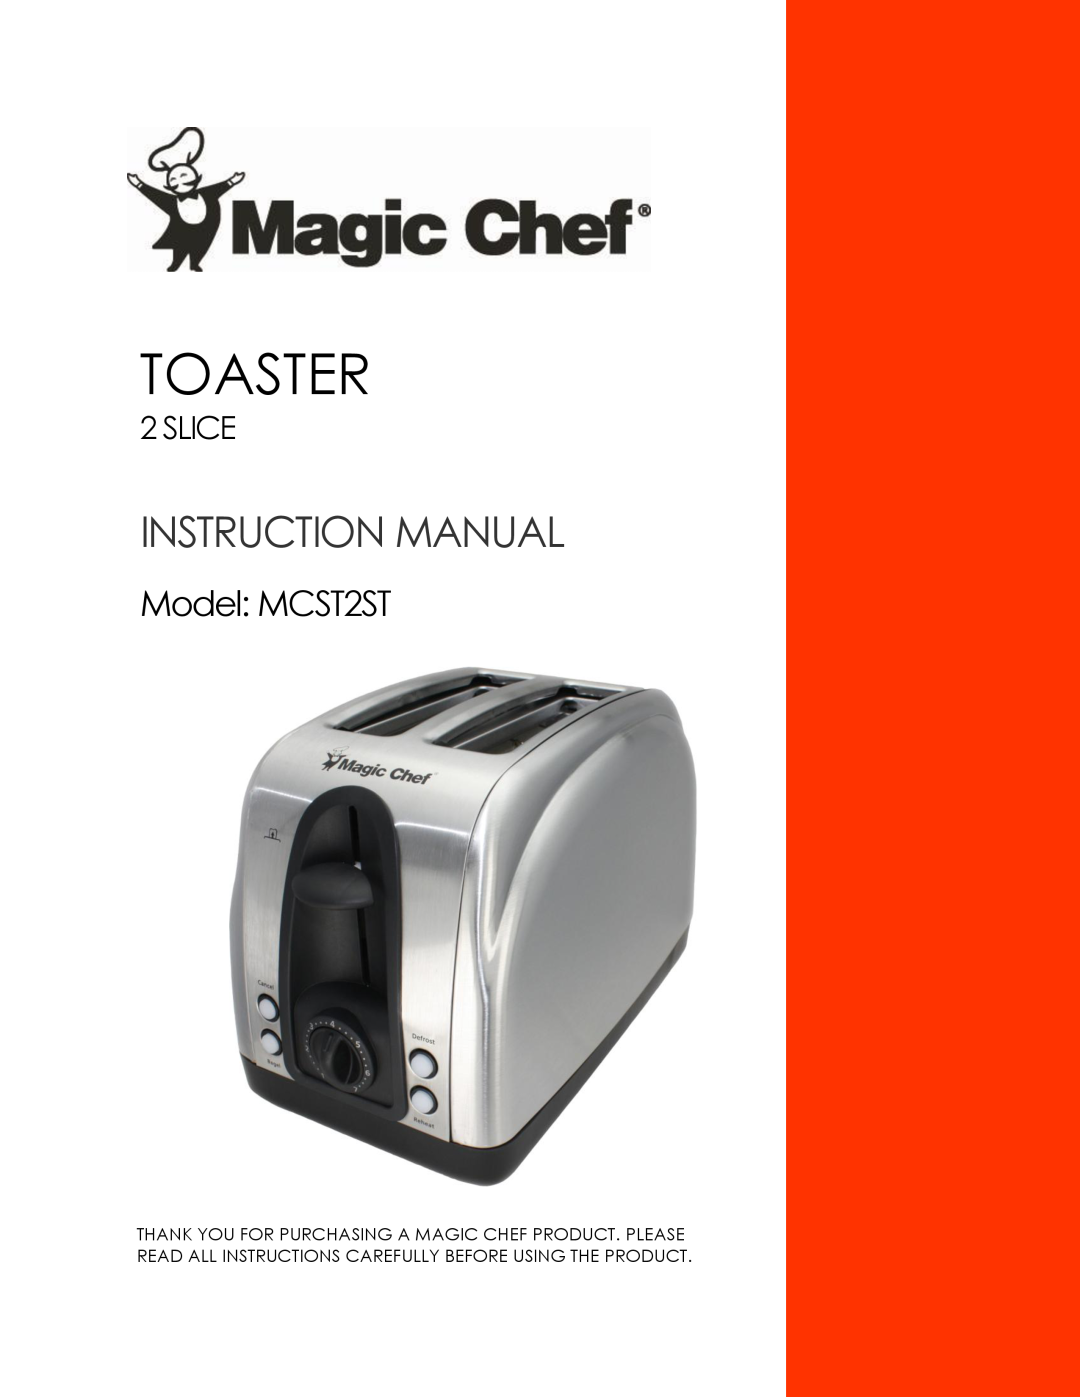 Magic Chef instruction manual Toaster, Model MCST2ST, Slice 